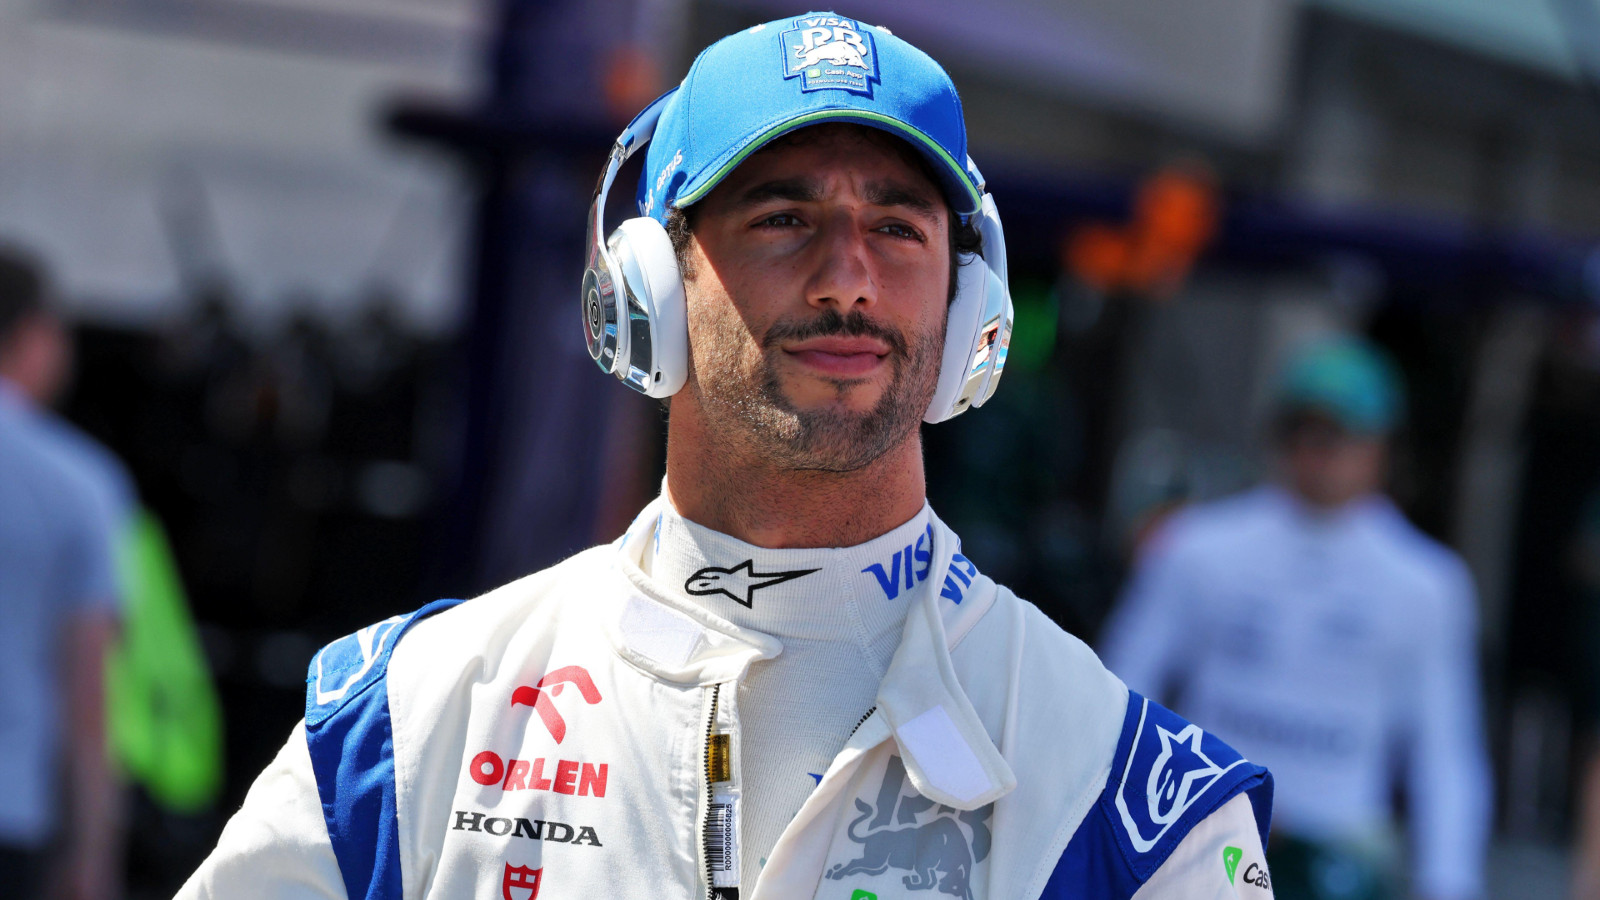 Daniel Ricciardo's Miami F1 Sprint Qualifying Marred by Two Wall Collisions